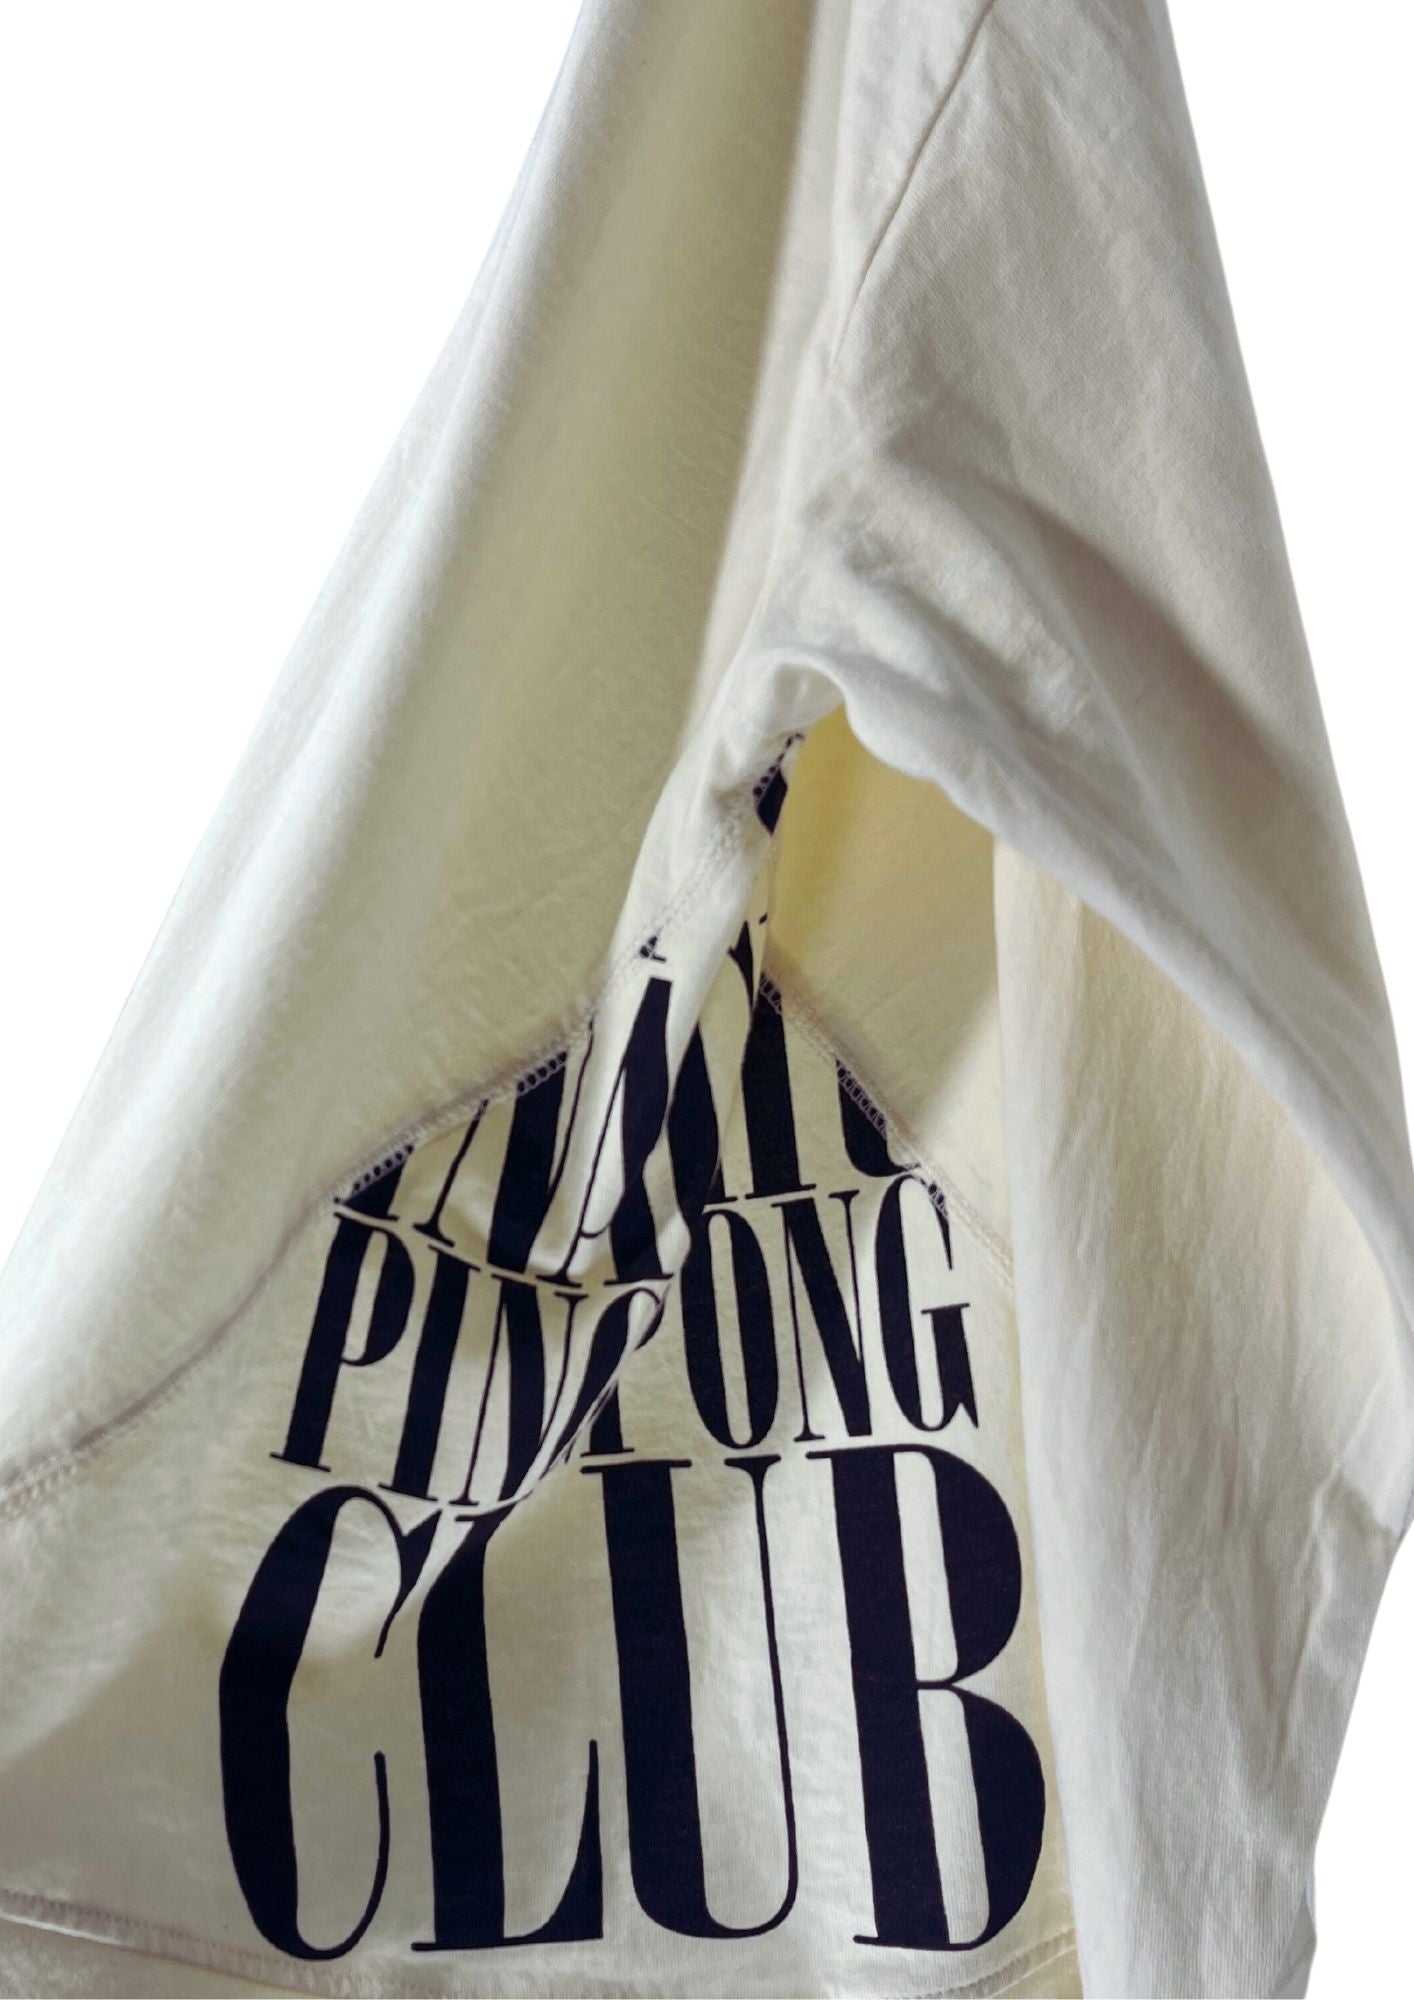 The Ping Pong Club x Double Name Flying Boys Long Sleeve Shirt